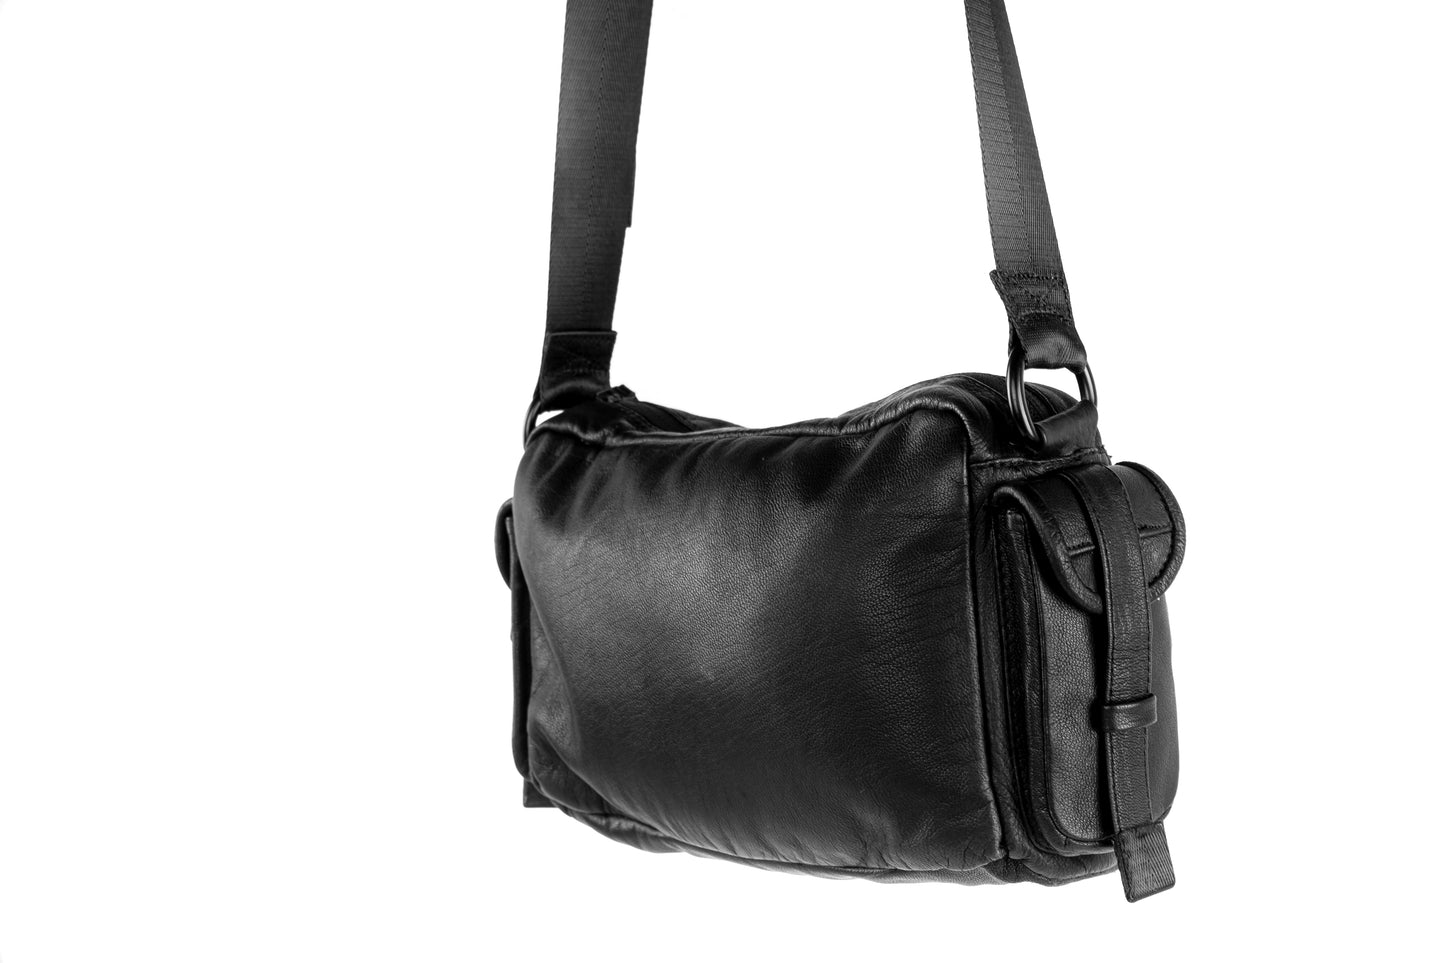 Tech 4 Black Leather Multifunctional Messenger Bag